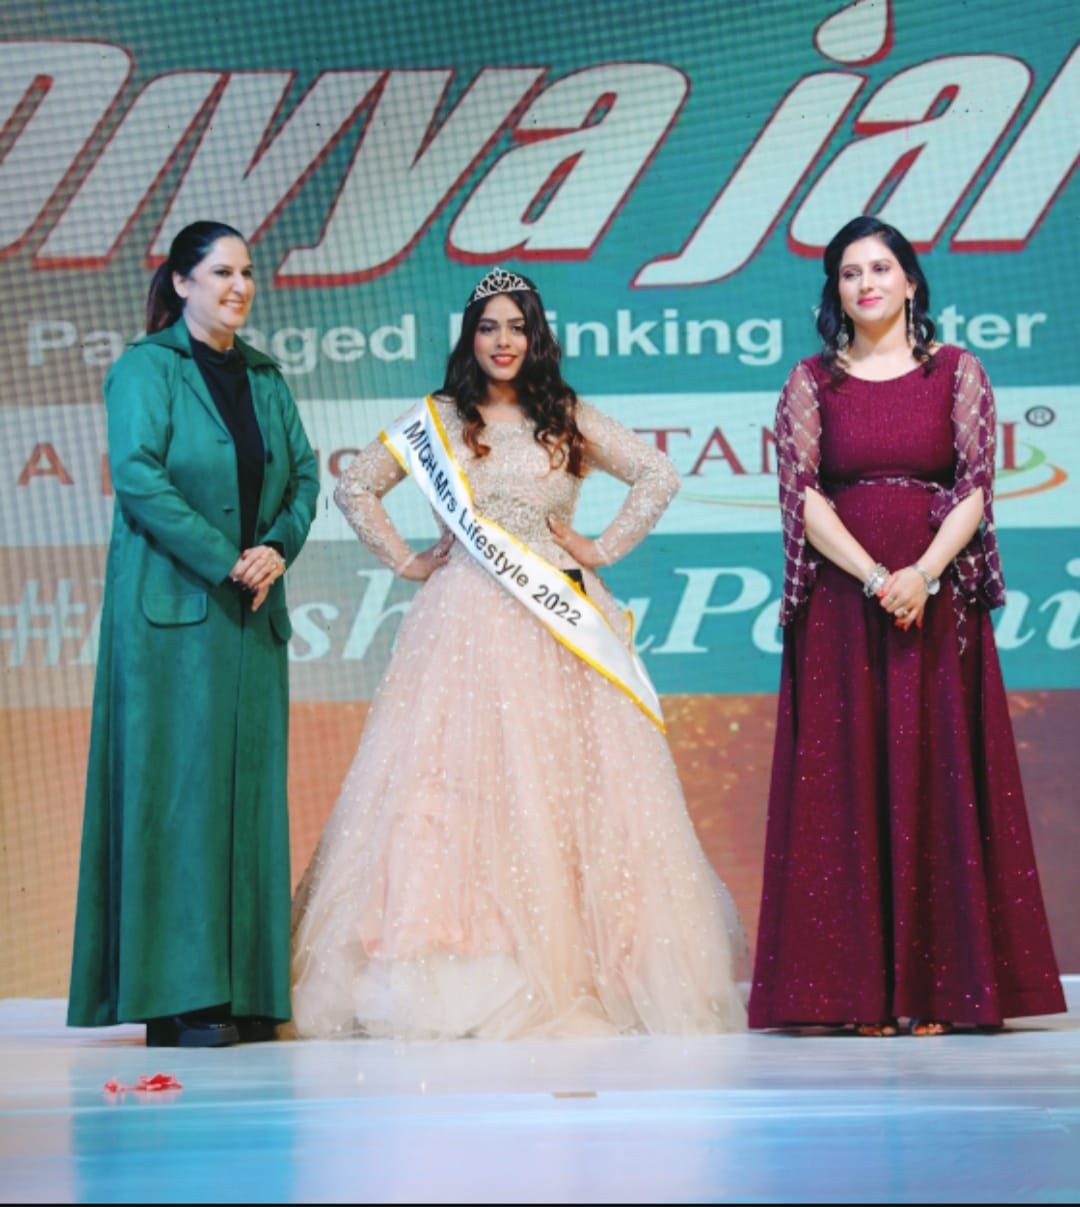 Manjishtha Gupta of Lucknow won the title of Mrs. India Lifestyle Queen 2022.